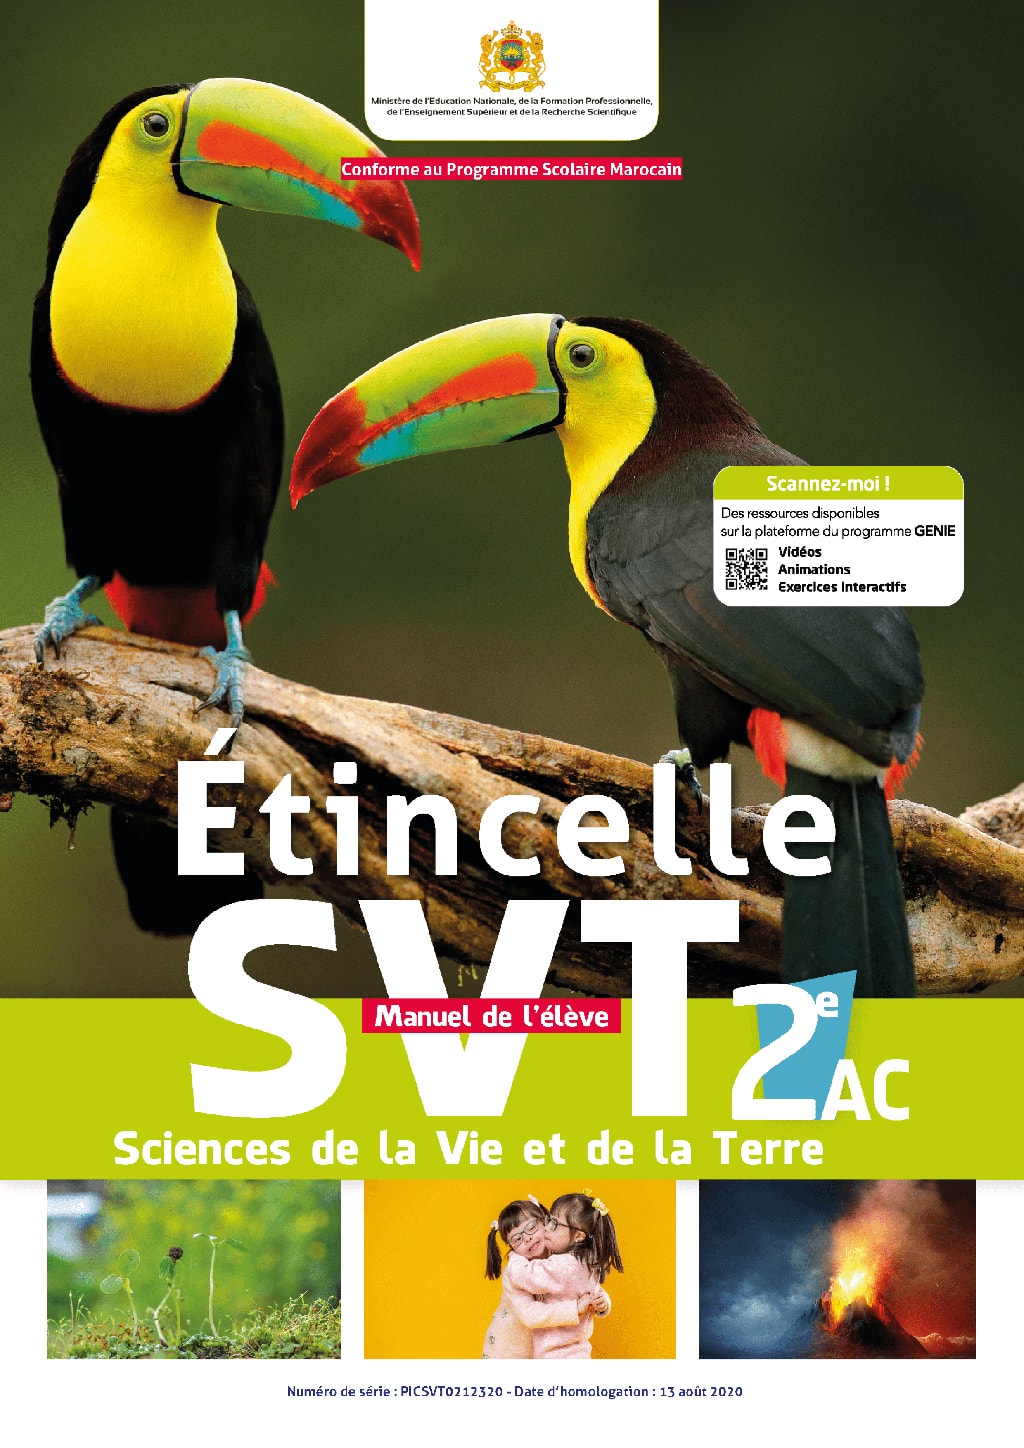 Etincelle SVT 2AC